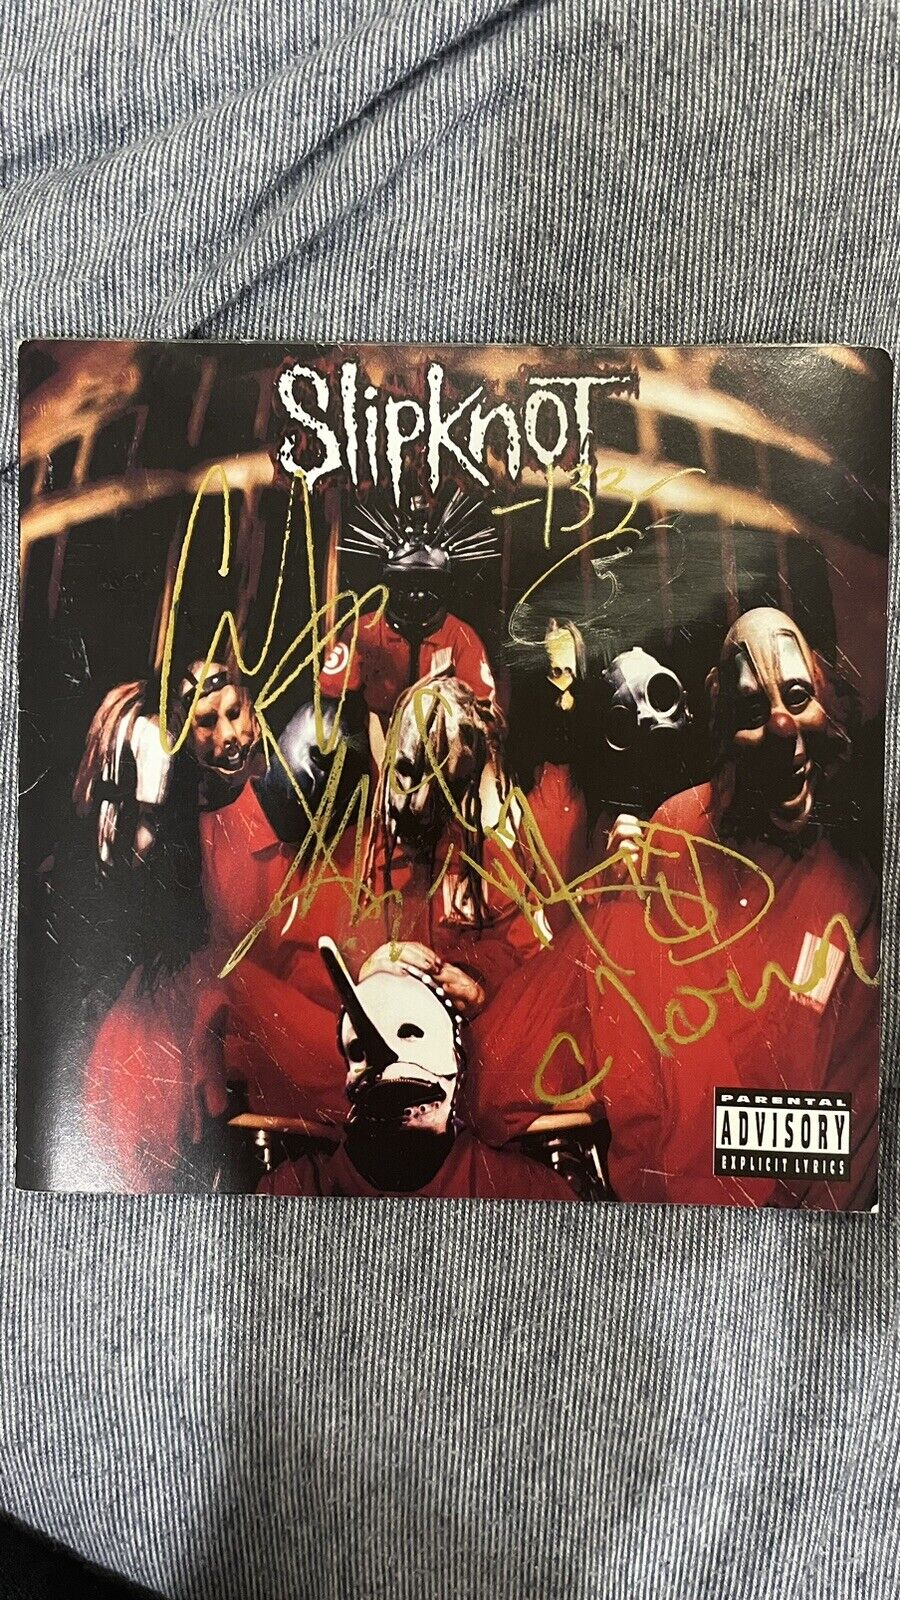 Signed Corey Taylor Slipknot Members 1999 CD Album